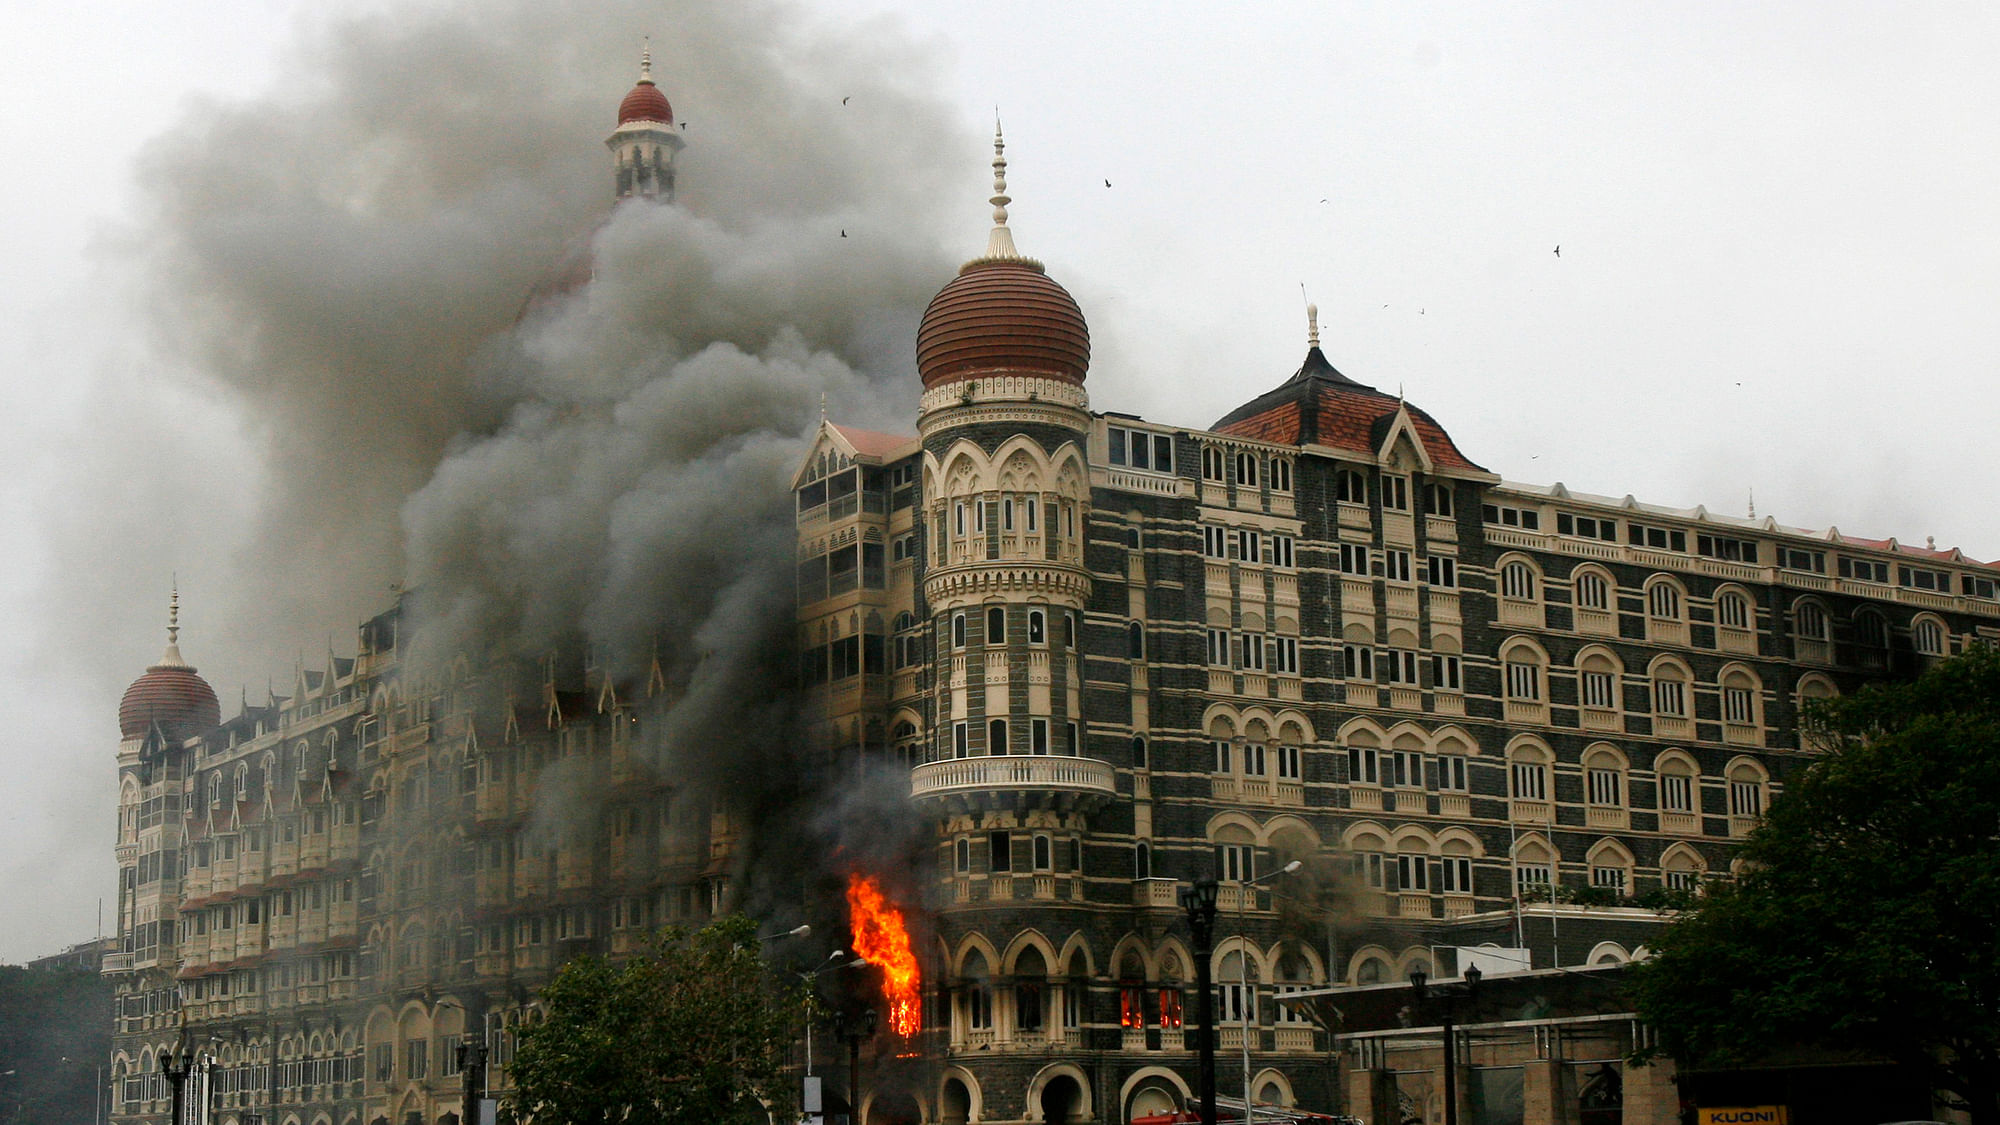 The Taj Mahal hotel is seen engulfed in smoke during a gun battle in Mumbai, November 2008. (Photo: Reuters)